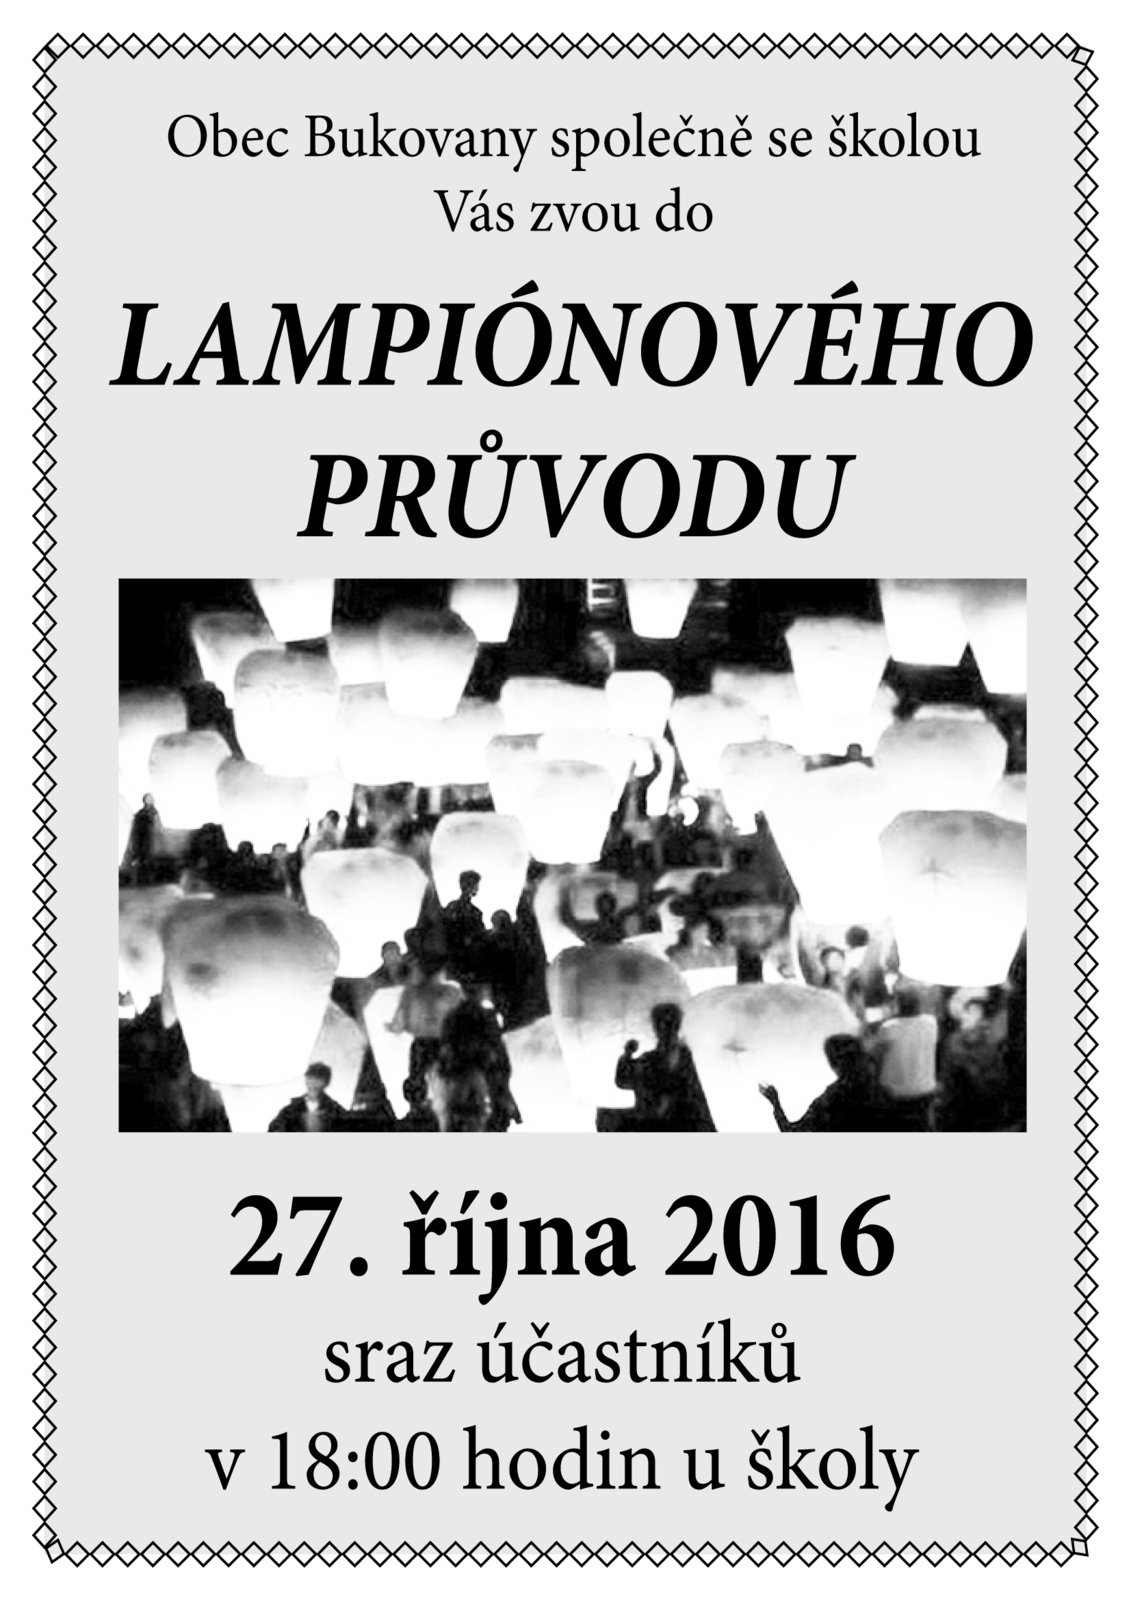 Lampionovy_pruvod_2016-inz.jpg